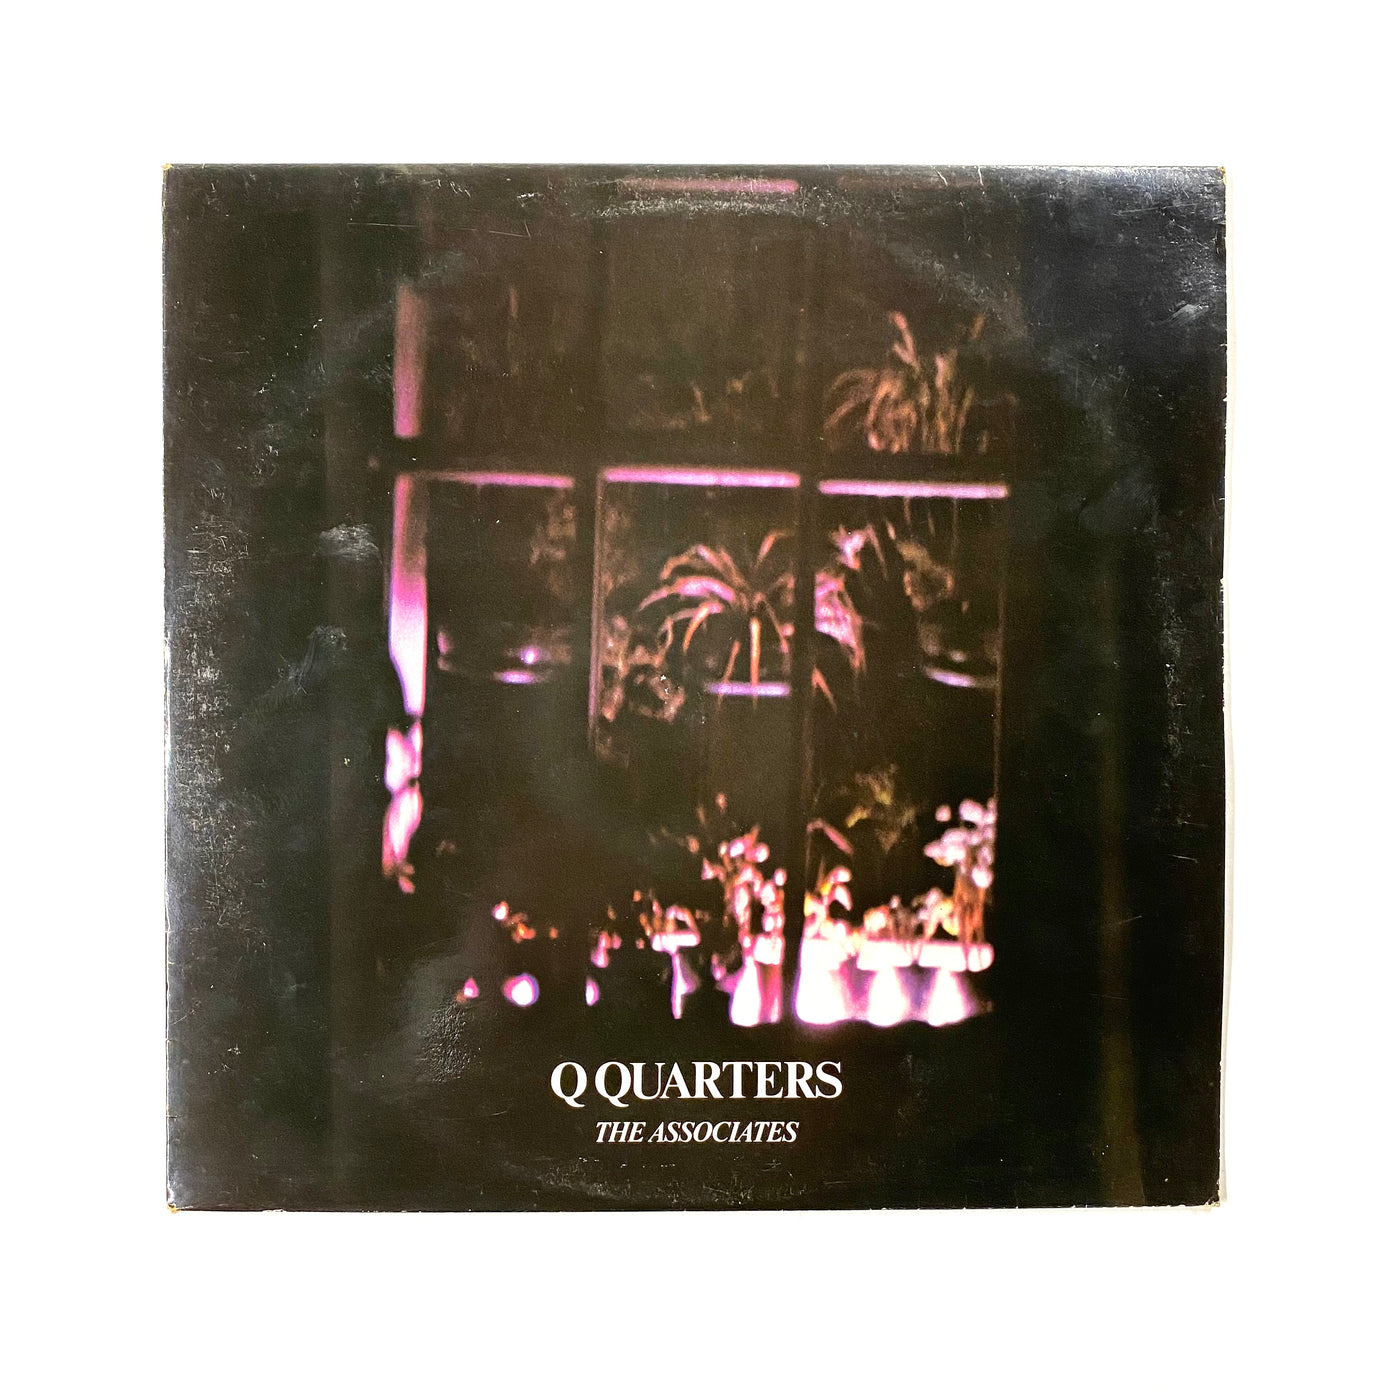 The Associates - Q Quarters